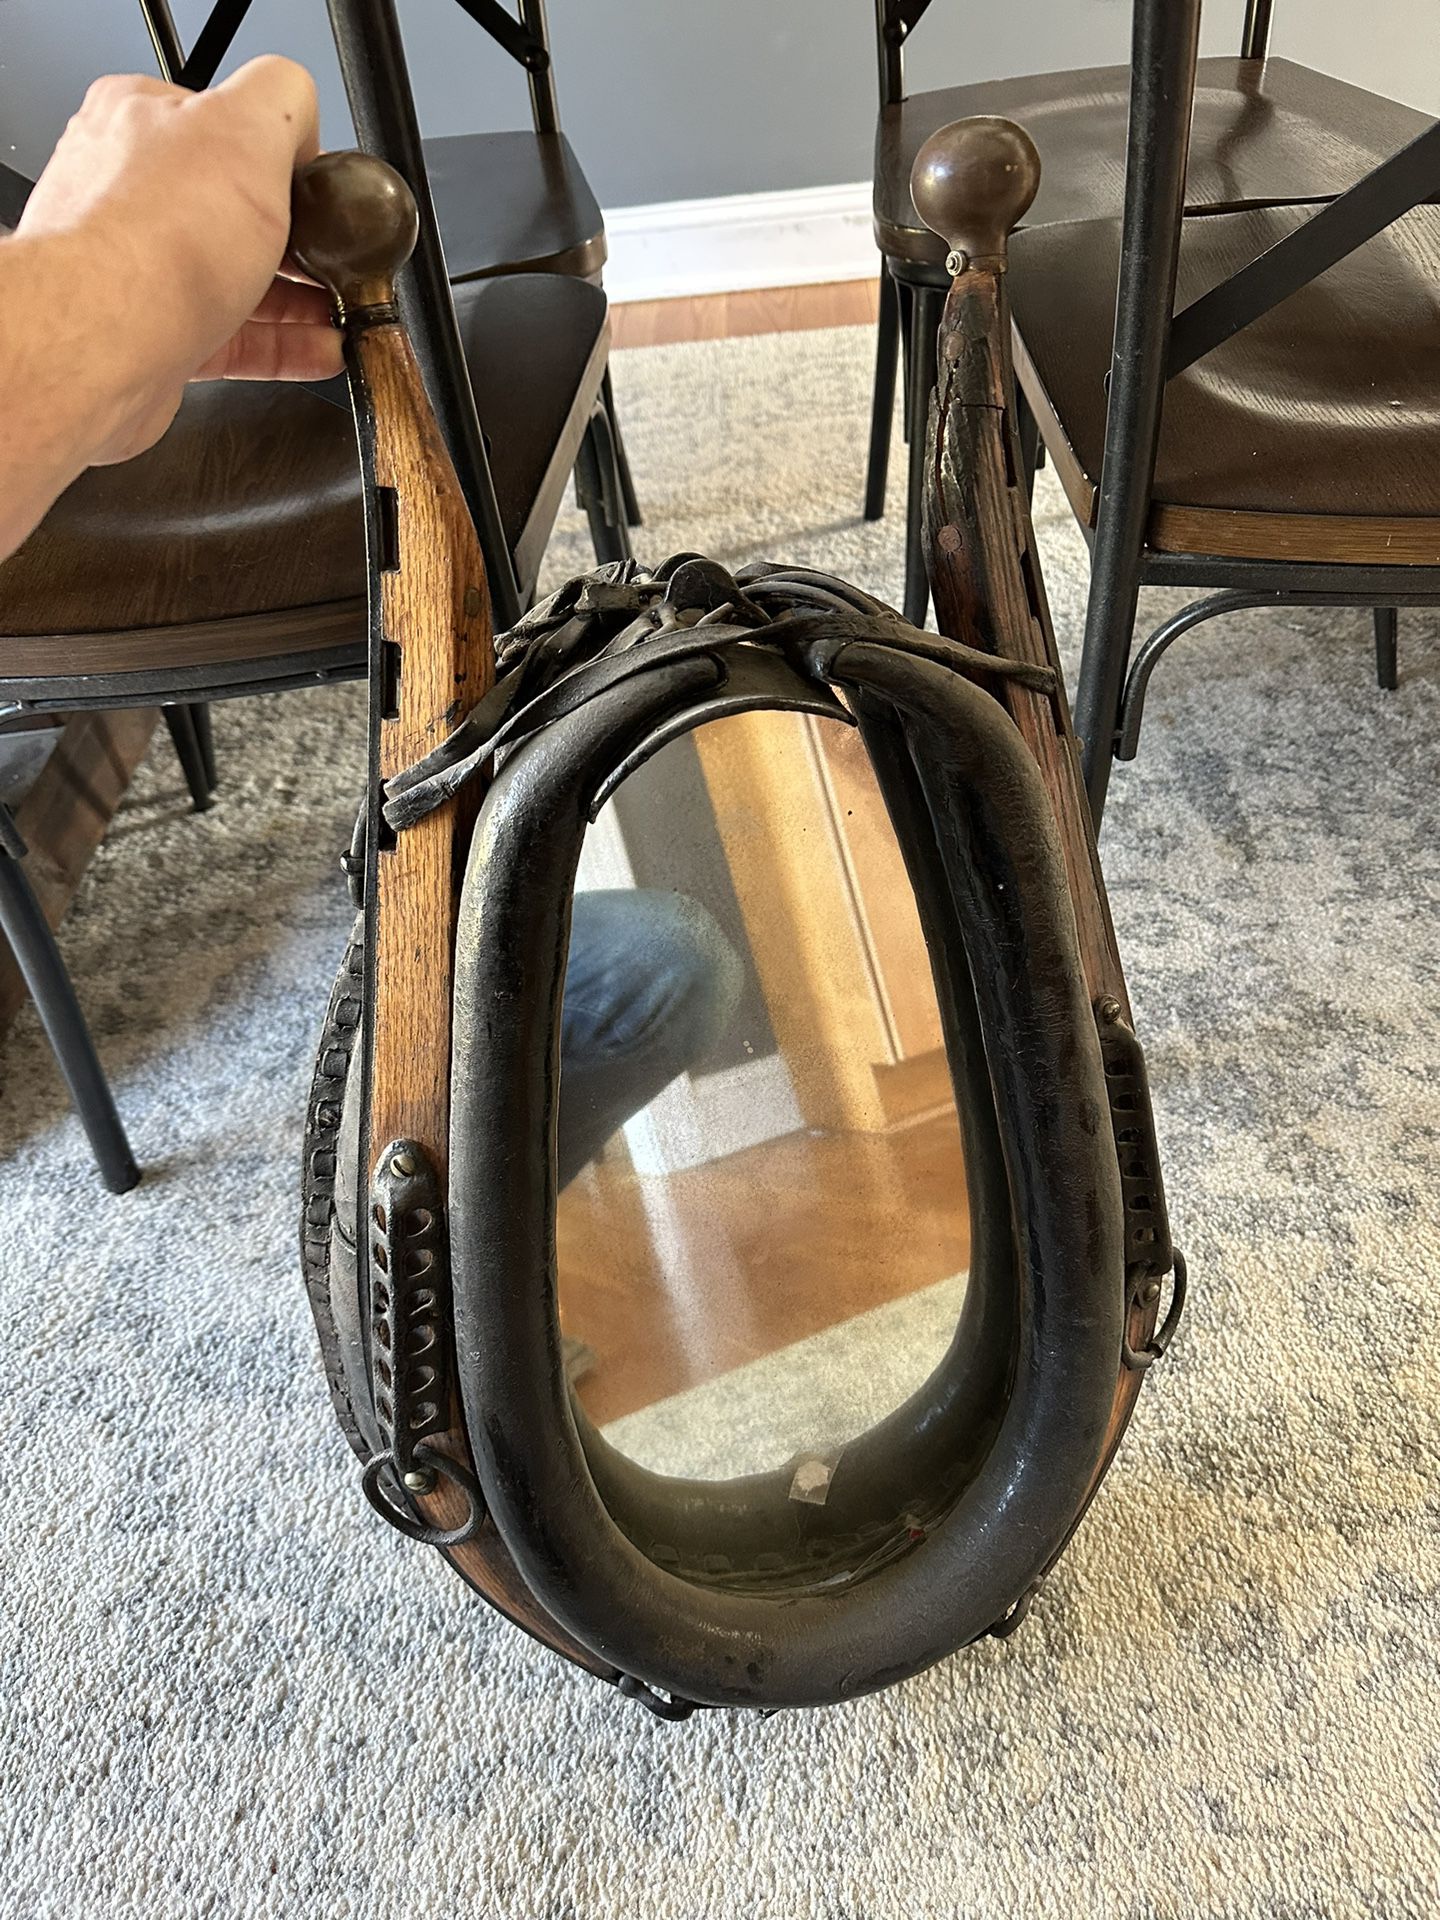 Horse Yolk Mirror